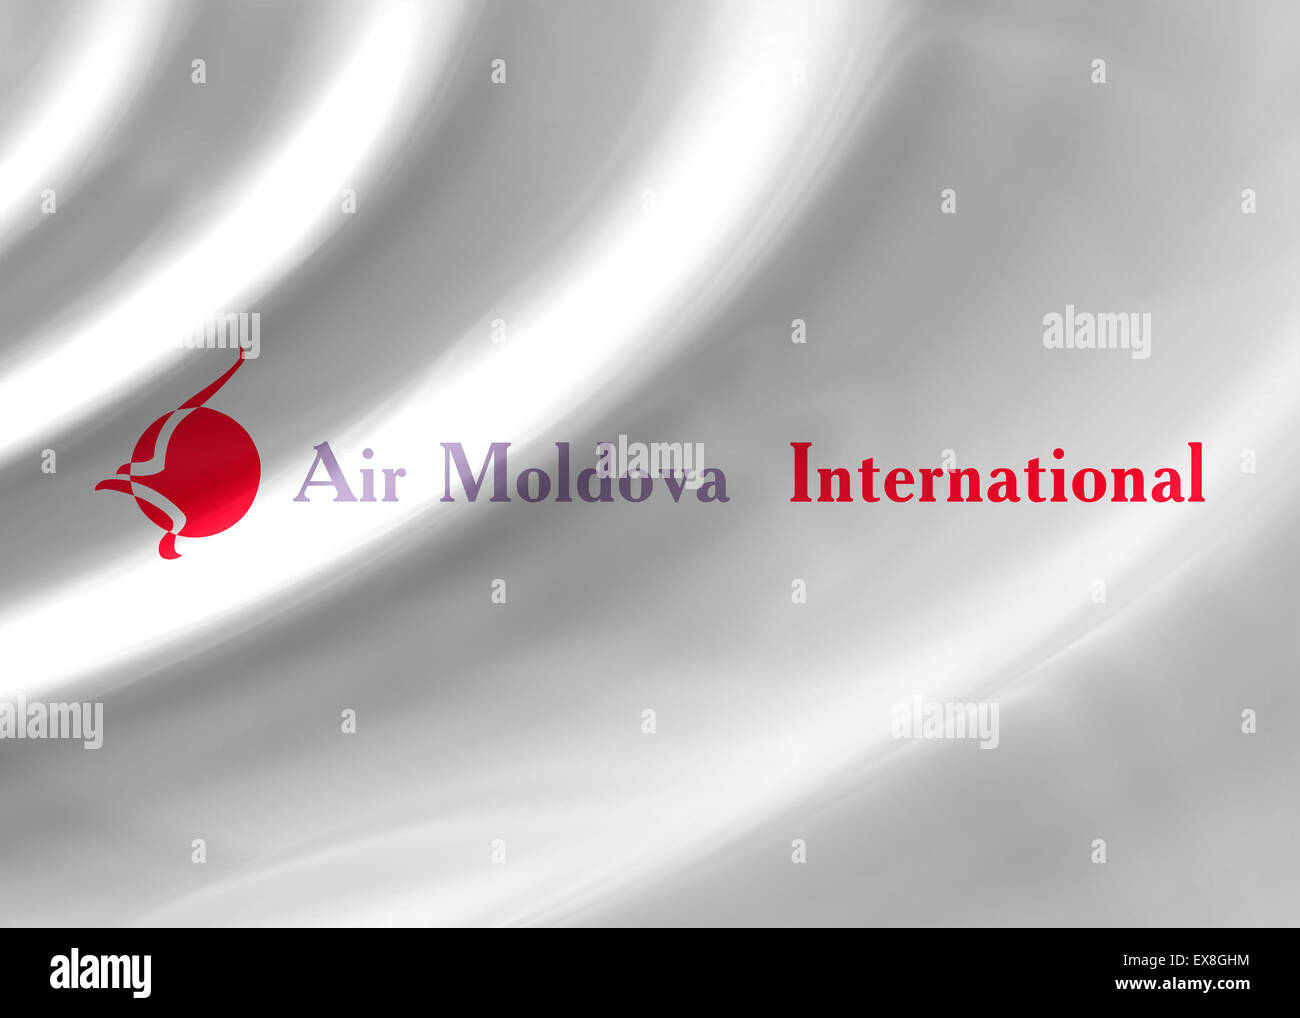 Air Moldova International Airlines logo icon flag symbol sign emblem Stock Photo